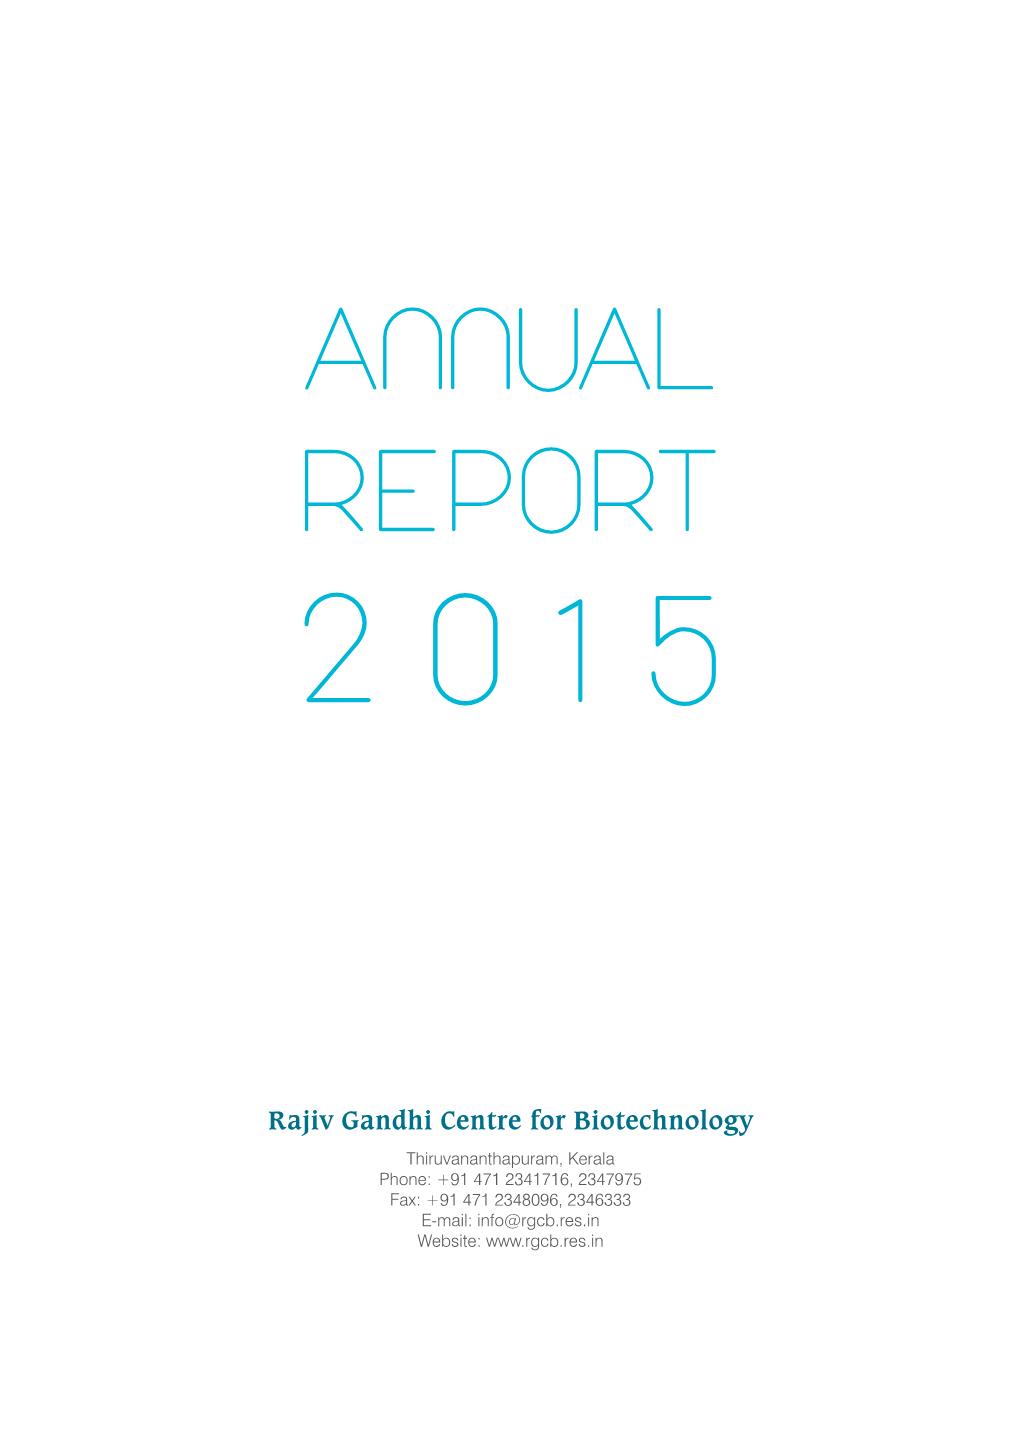 Annual Report 2015 Rajiv Gandhi Centre for Biotechnology